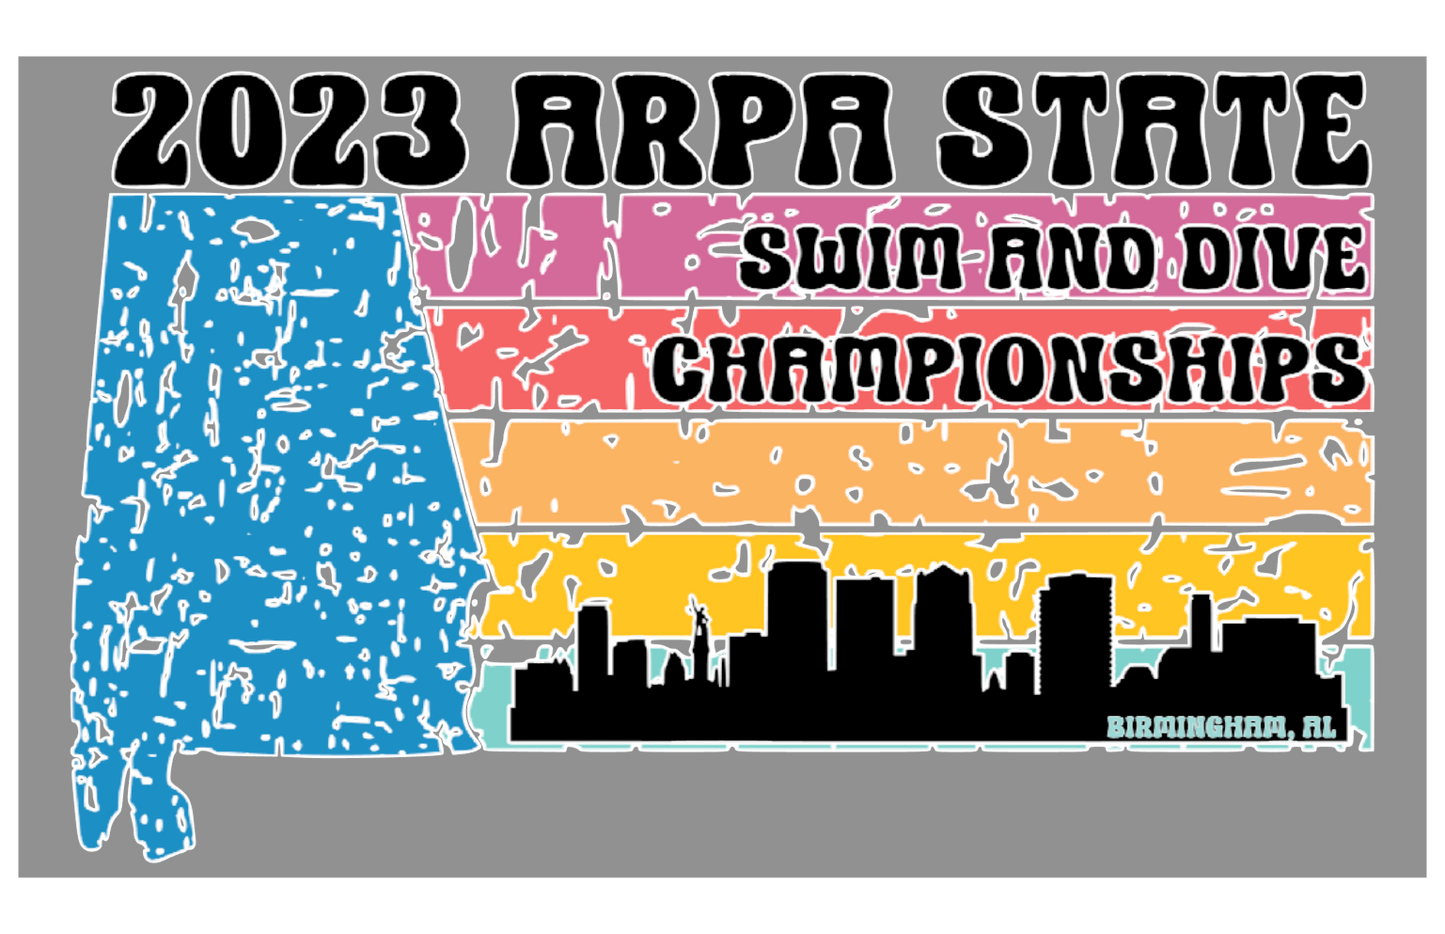 ADULT 2023 ARPA State swim/dive Championships T-Shirt